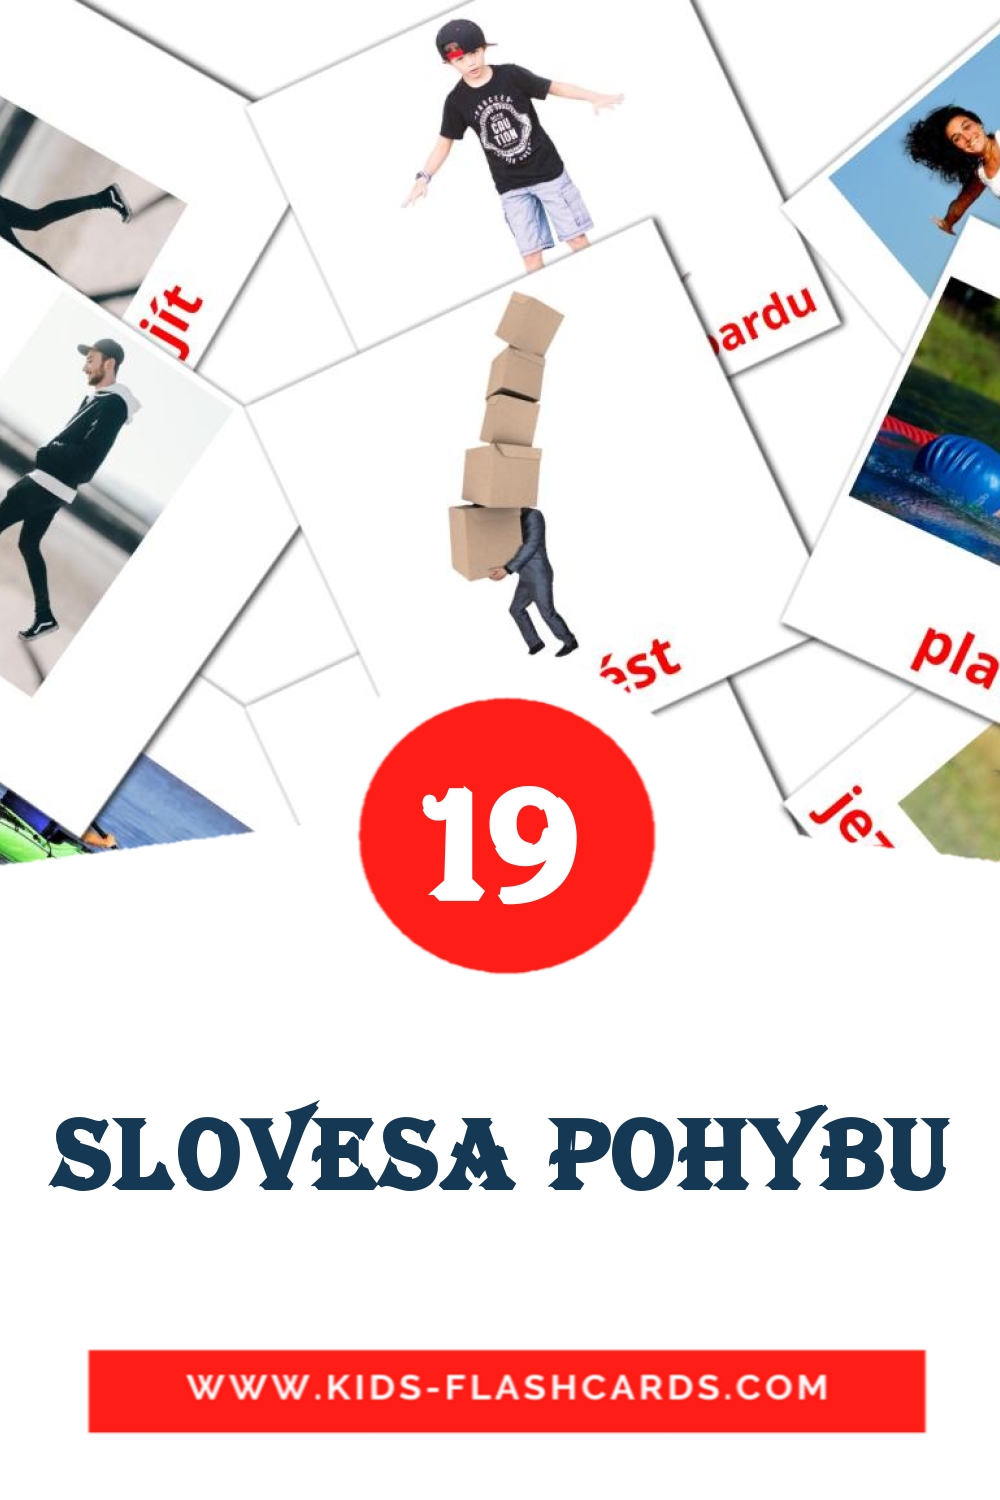 Slovesa pohybu на чешском для Детского Сада (22 карточки)